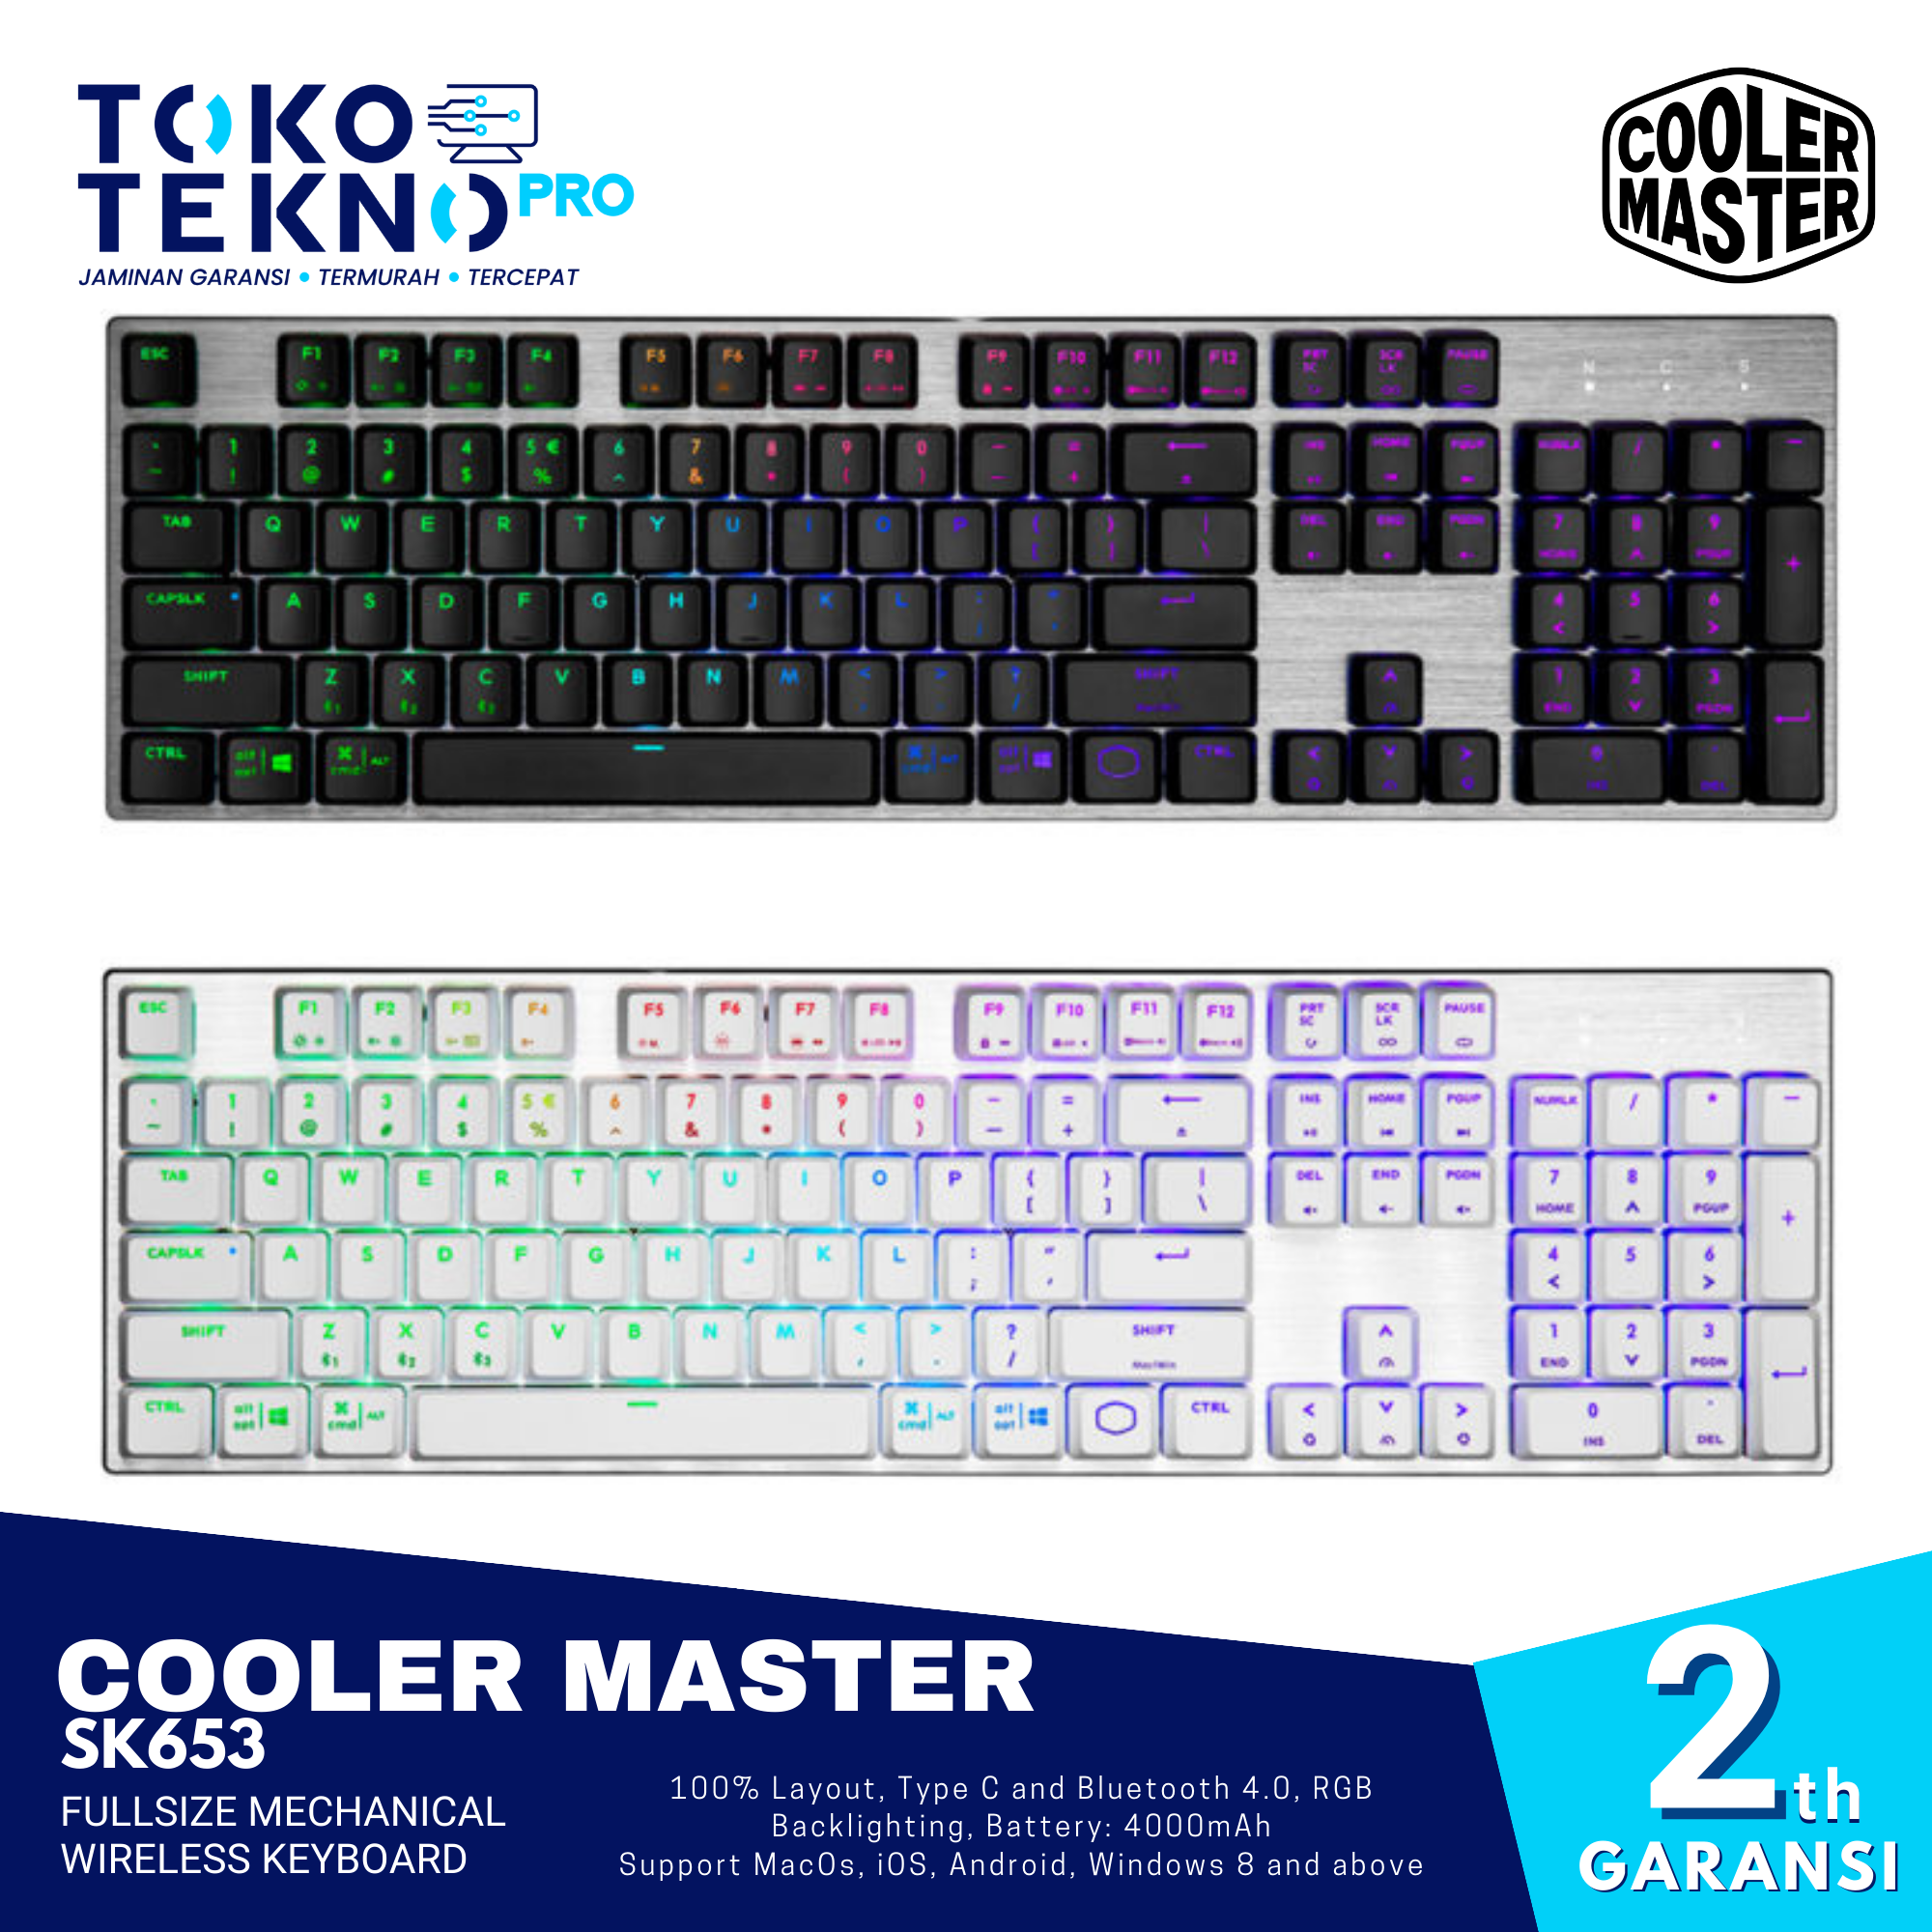 Cooler Master SK653 Fullsize Mechanical Wireless Keyboard